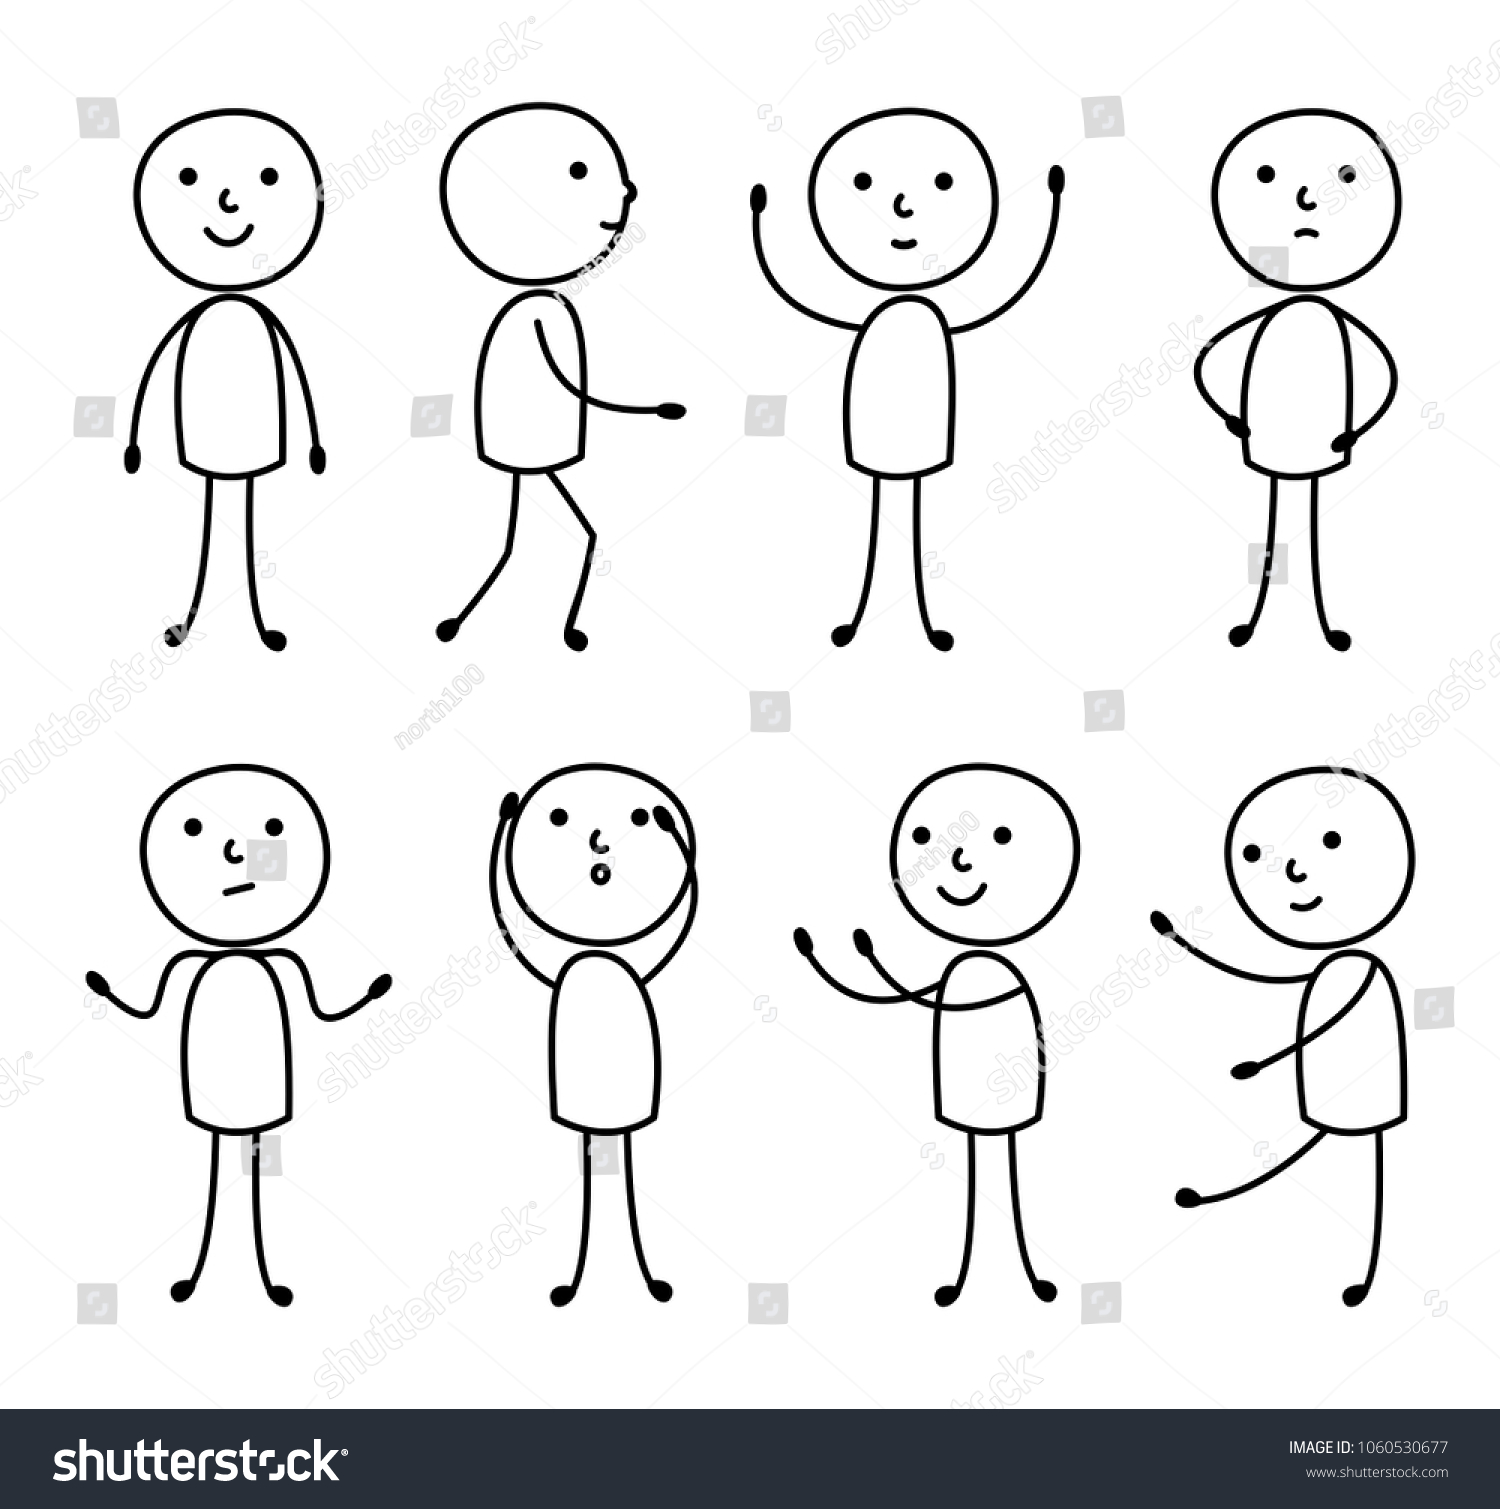 Person Set Gestures Stick Figure Pictograms Stock Illustration ...